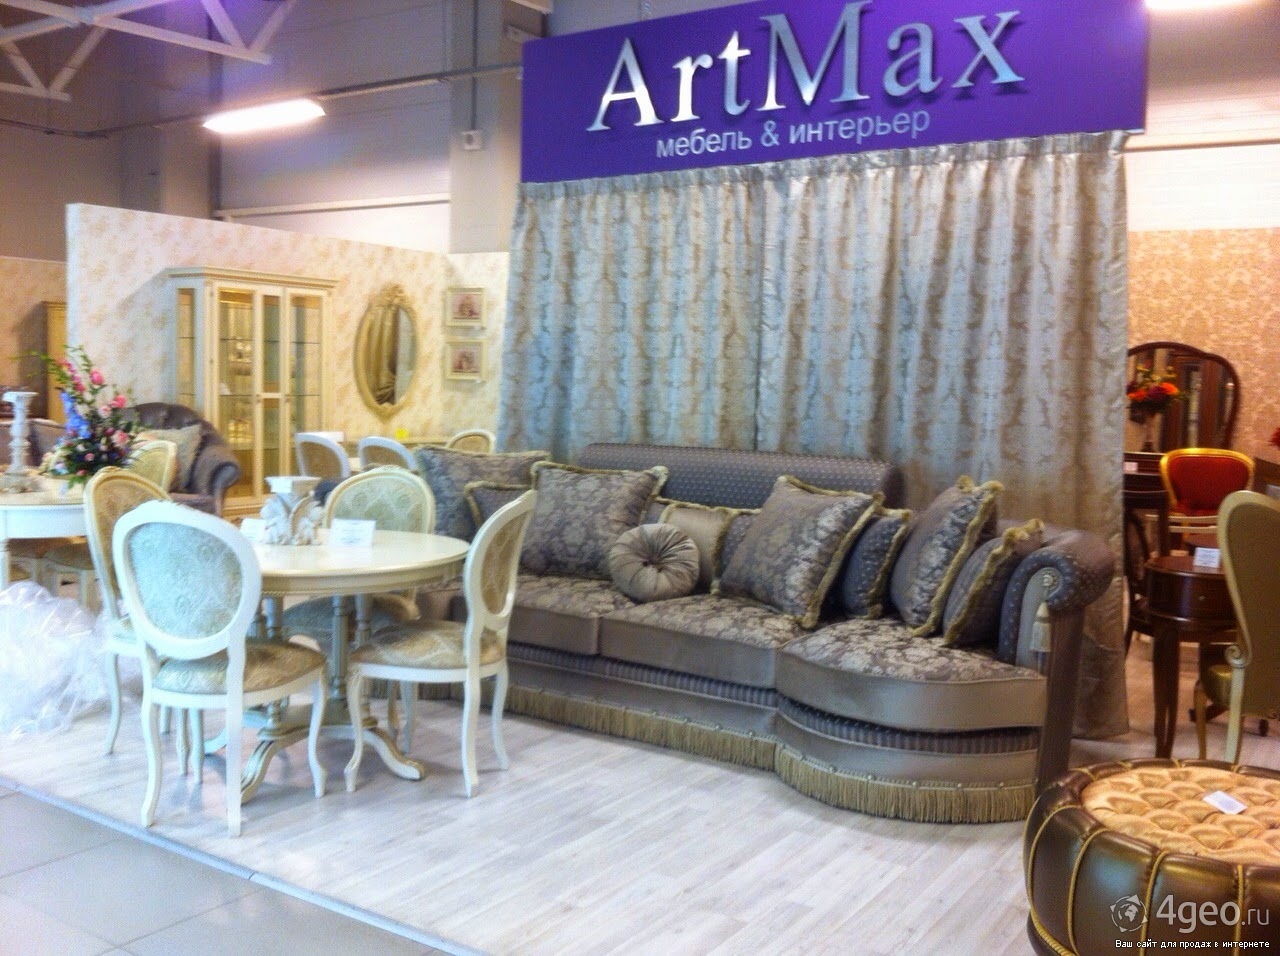 Artmax мебель